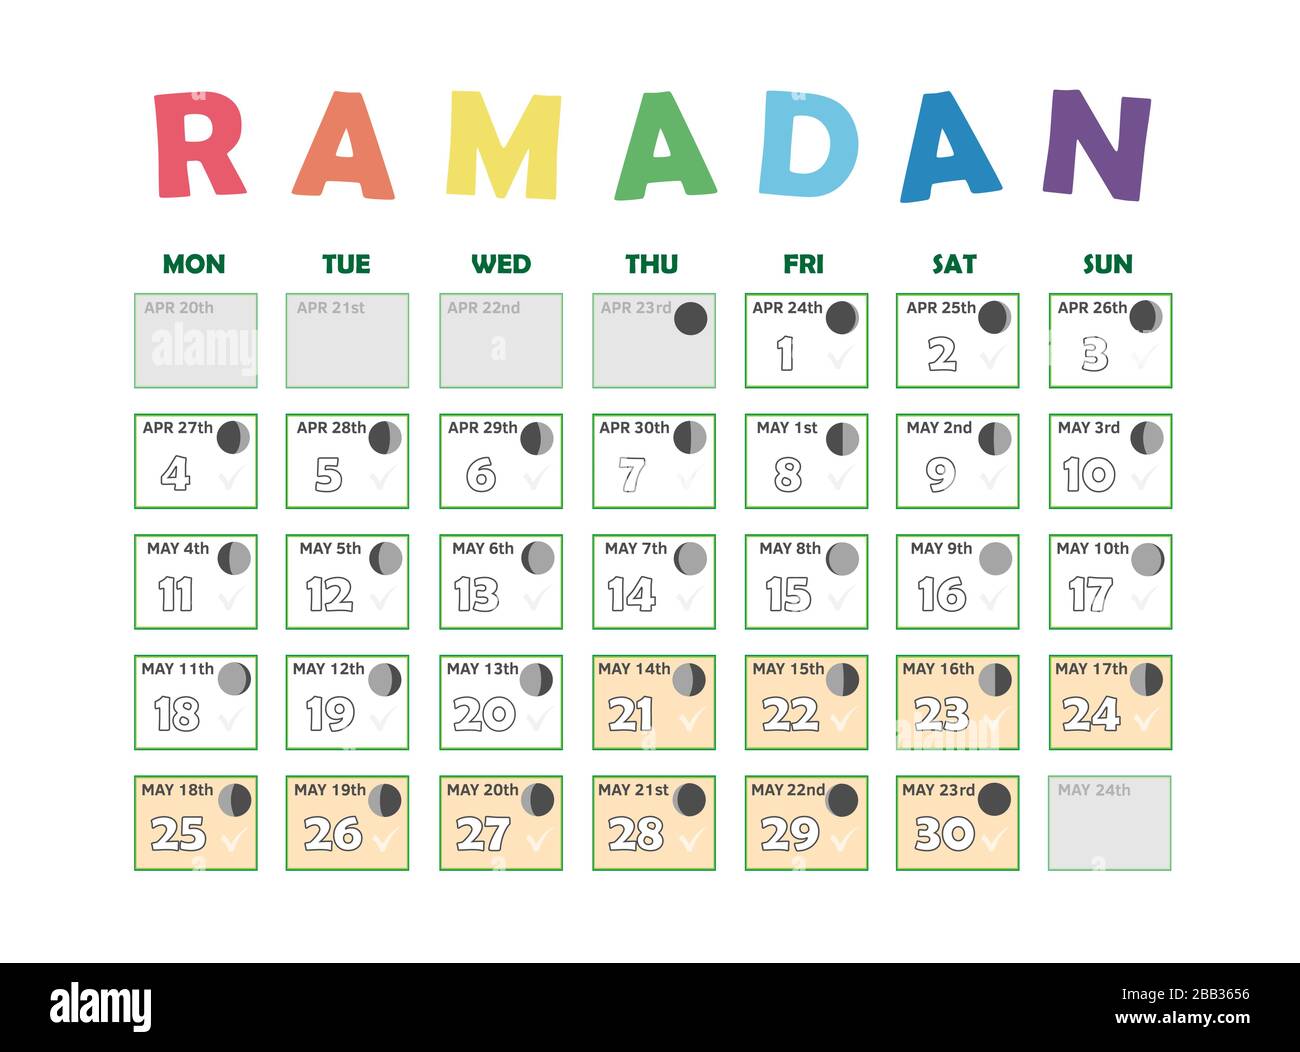 Ramadan Kalender 2020. Fastenkalender, Mondzyklusphasen, Neumond. 30 Tage  des islamischen Heiligen Monats Ramadan. Vektorgrafik-Abbildung  Stock-Vektorgrafik - Alamy